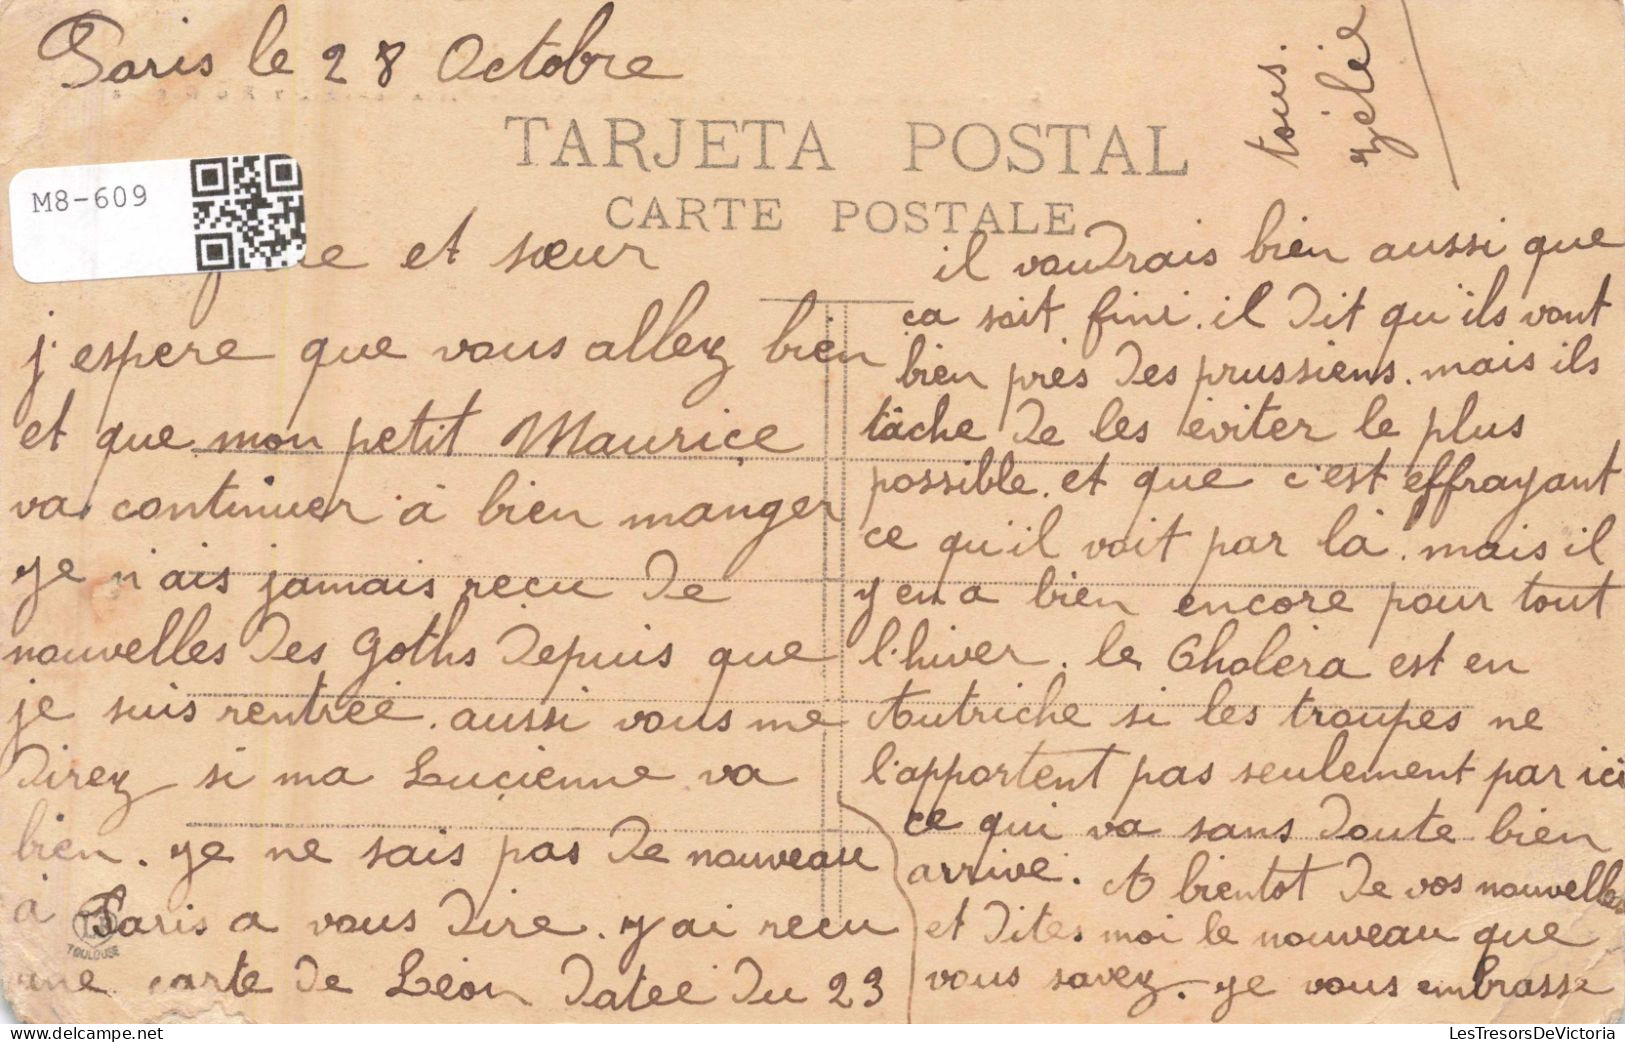 ESPAGNE - Valle De Aran - Bosost - Vista General  - Carte Postale Ancienne - Lérida